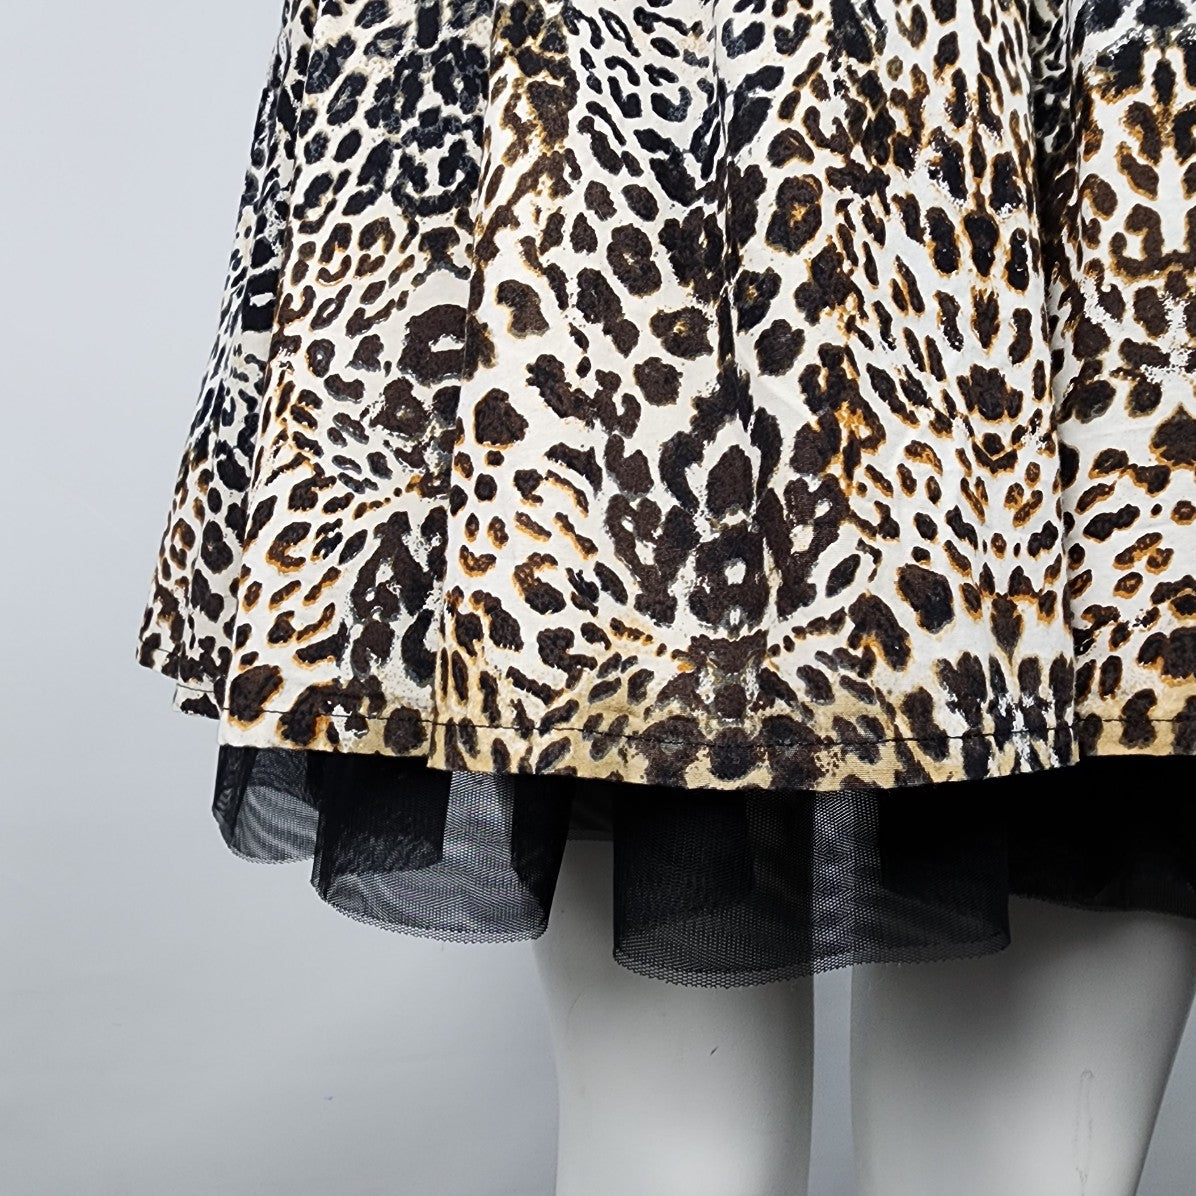 Jessica Simpson Animal Print Fit & Flare Tulle Skirt Dress Size 15/16